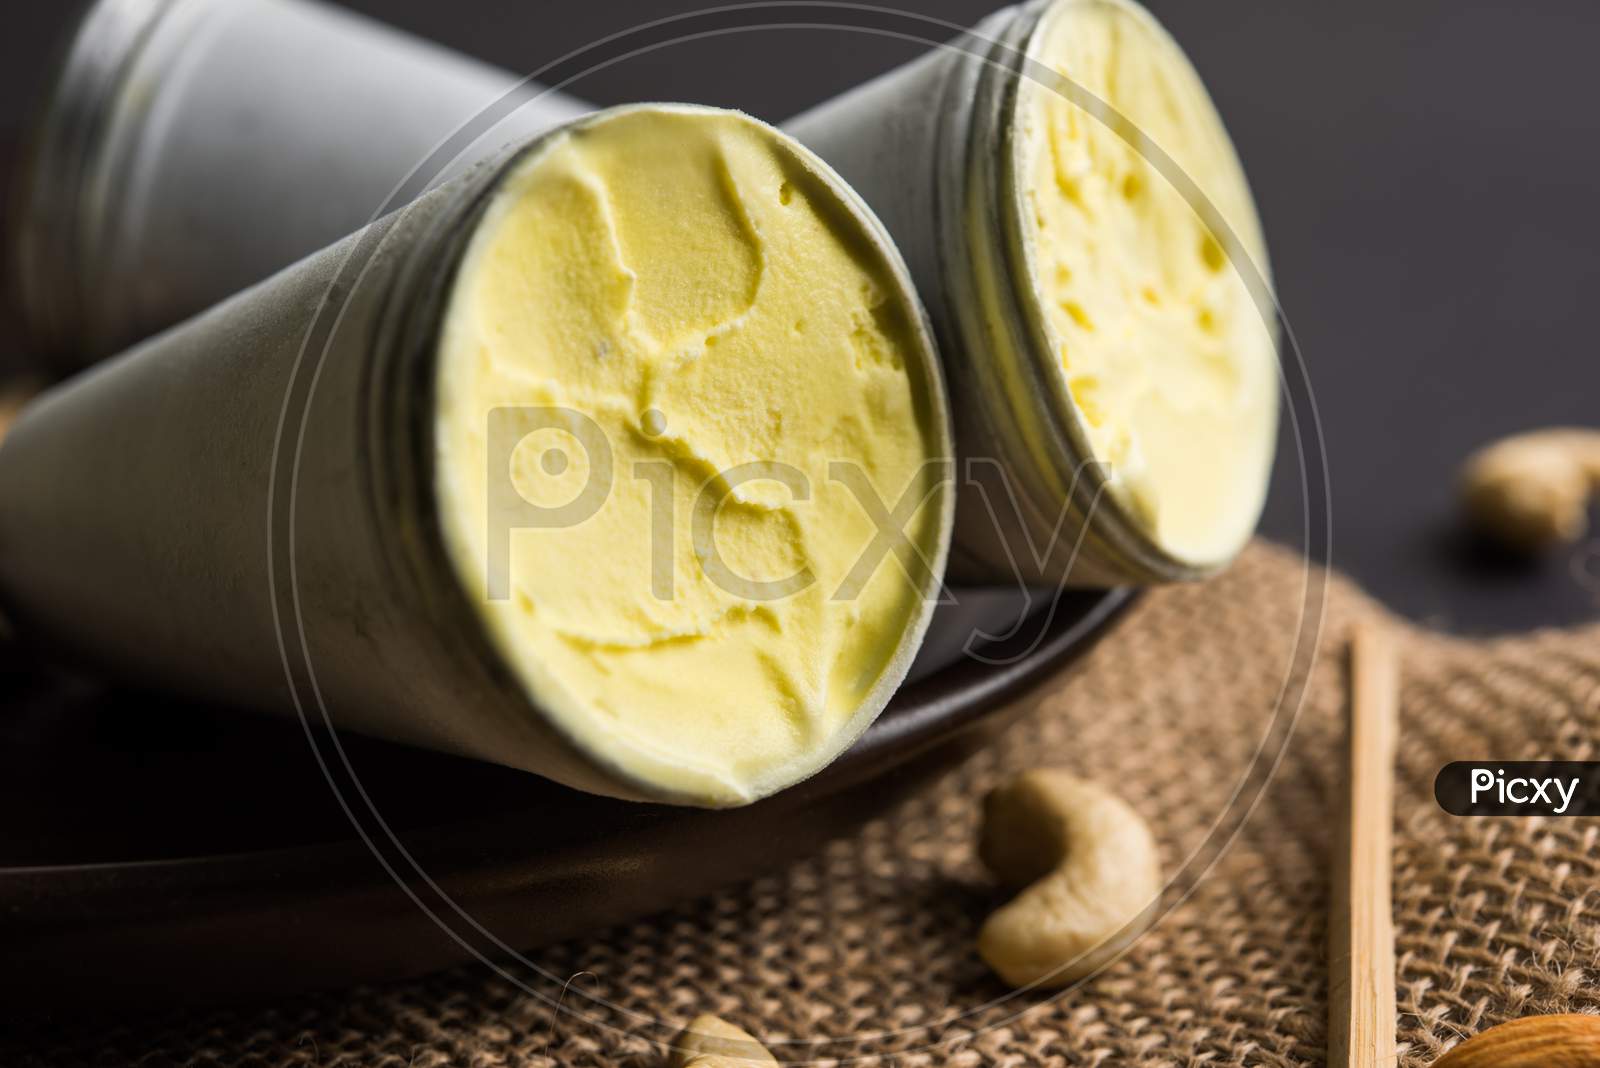 Shahi Kulfi or Indian Ice Cream Candy